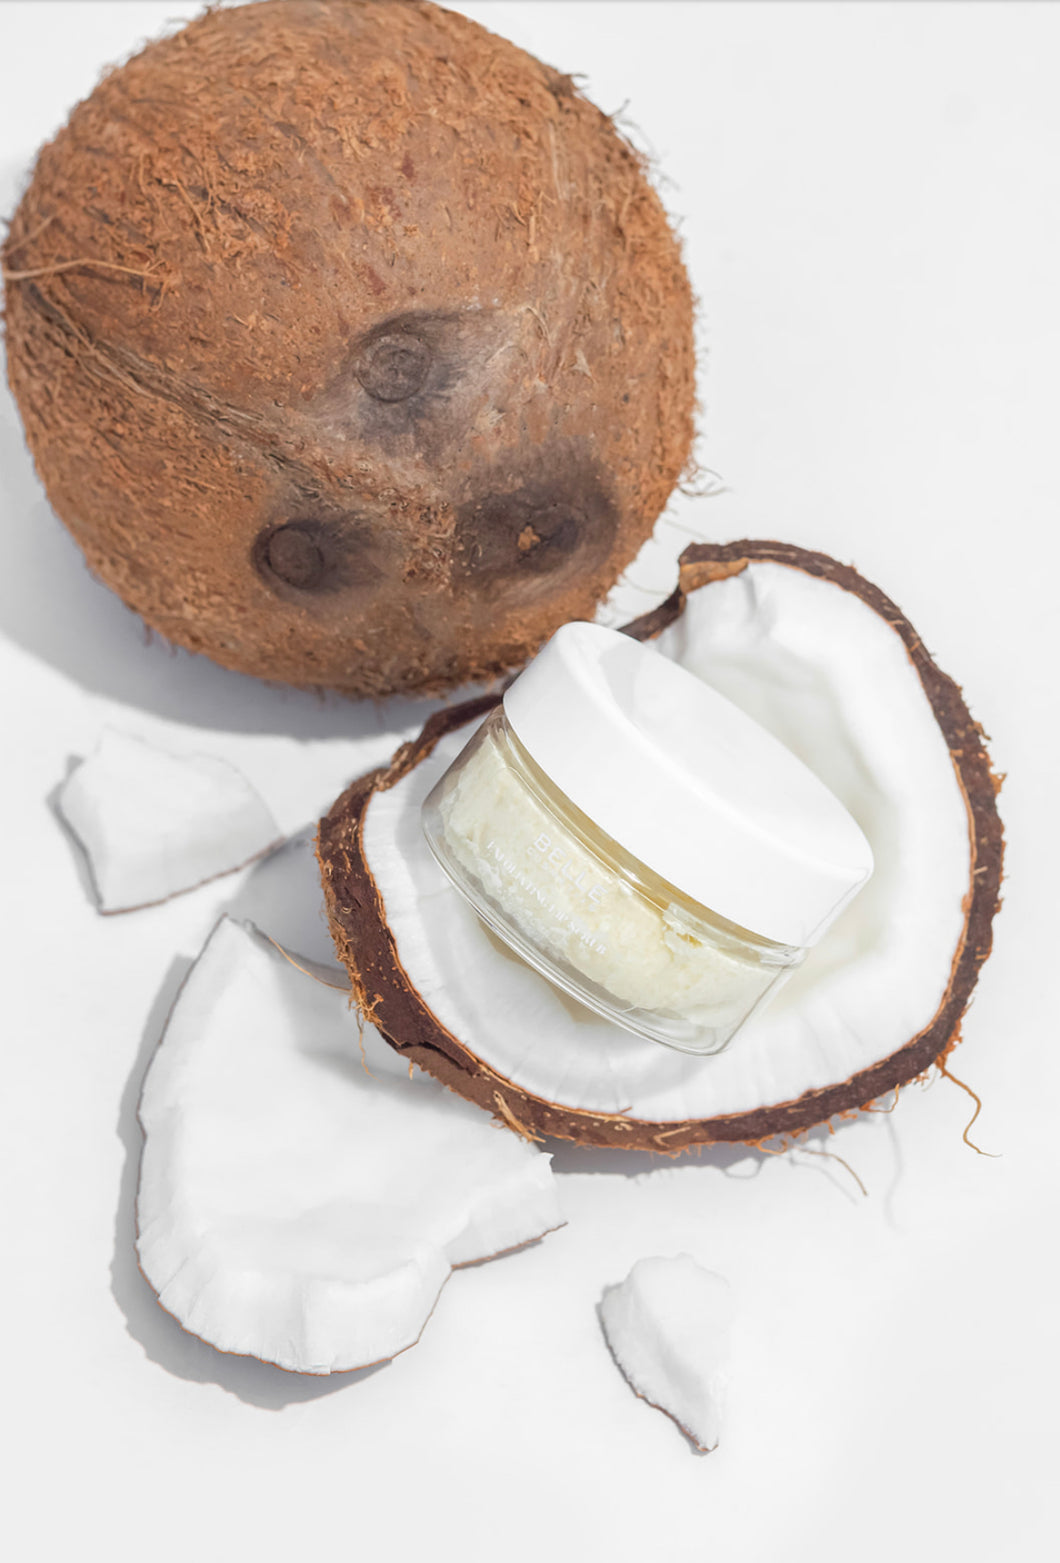 Coconut Exfoliating Lip Scrub